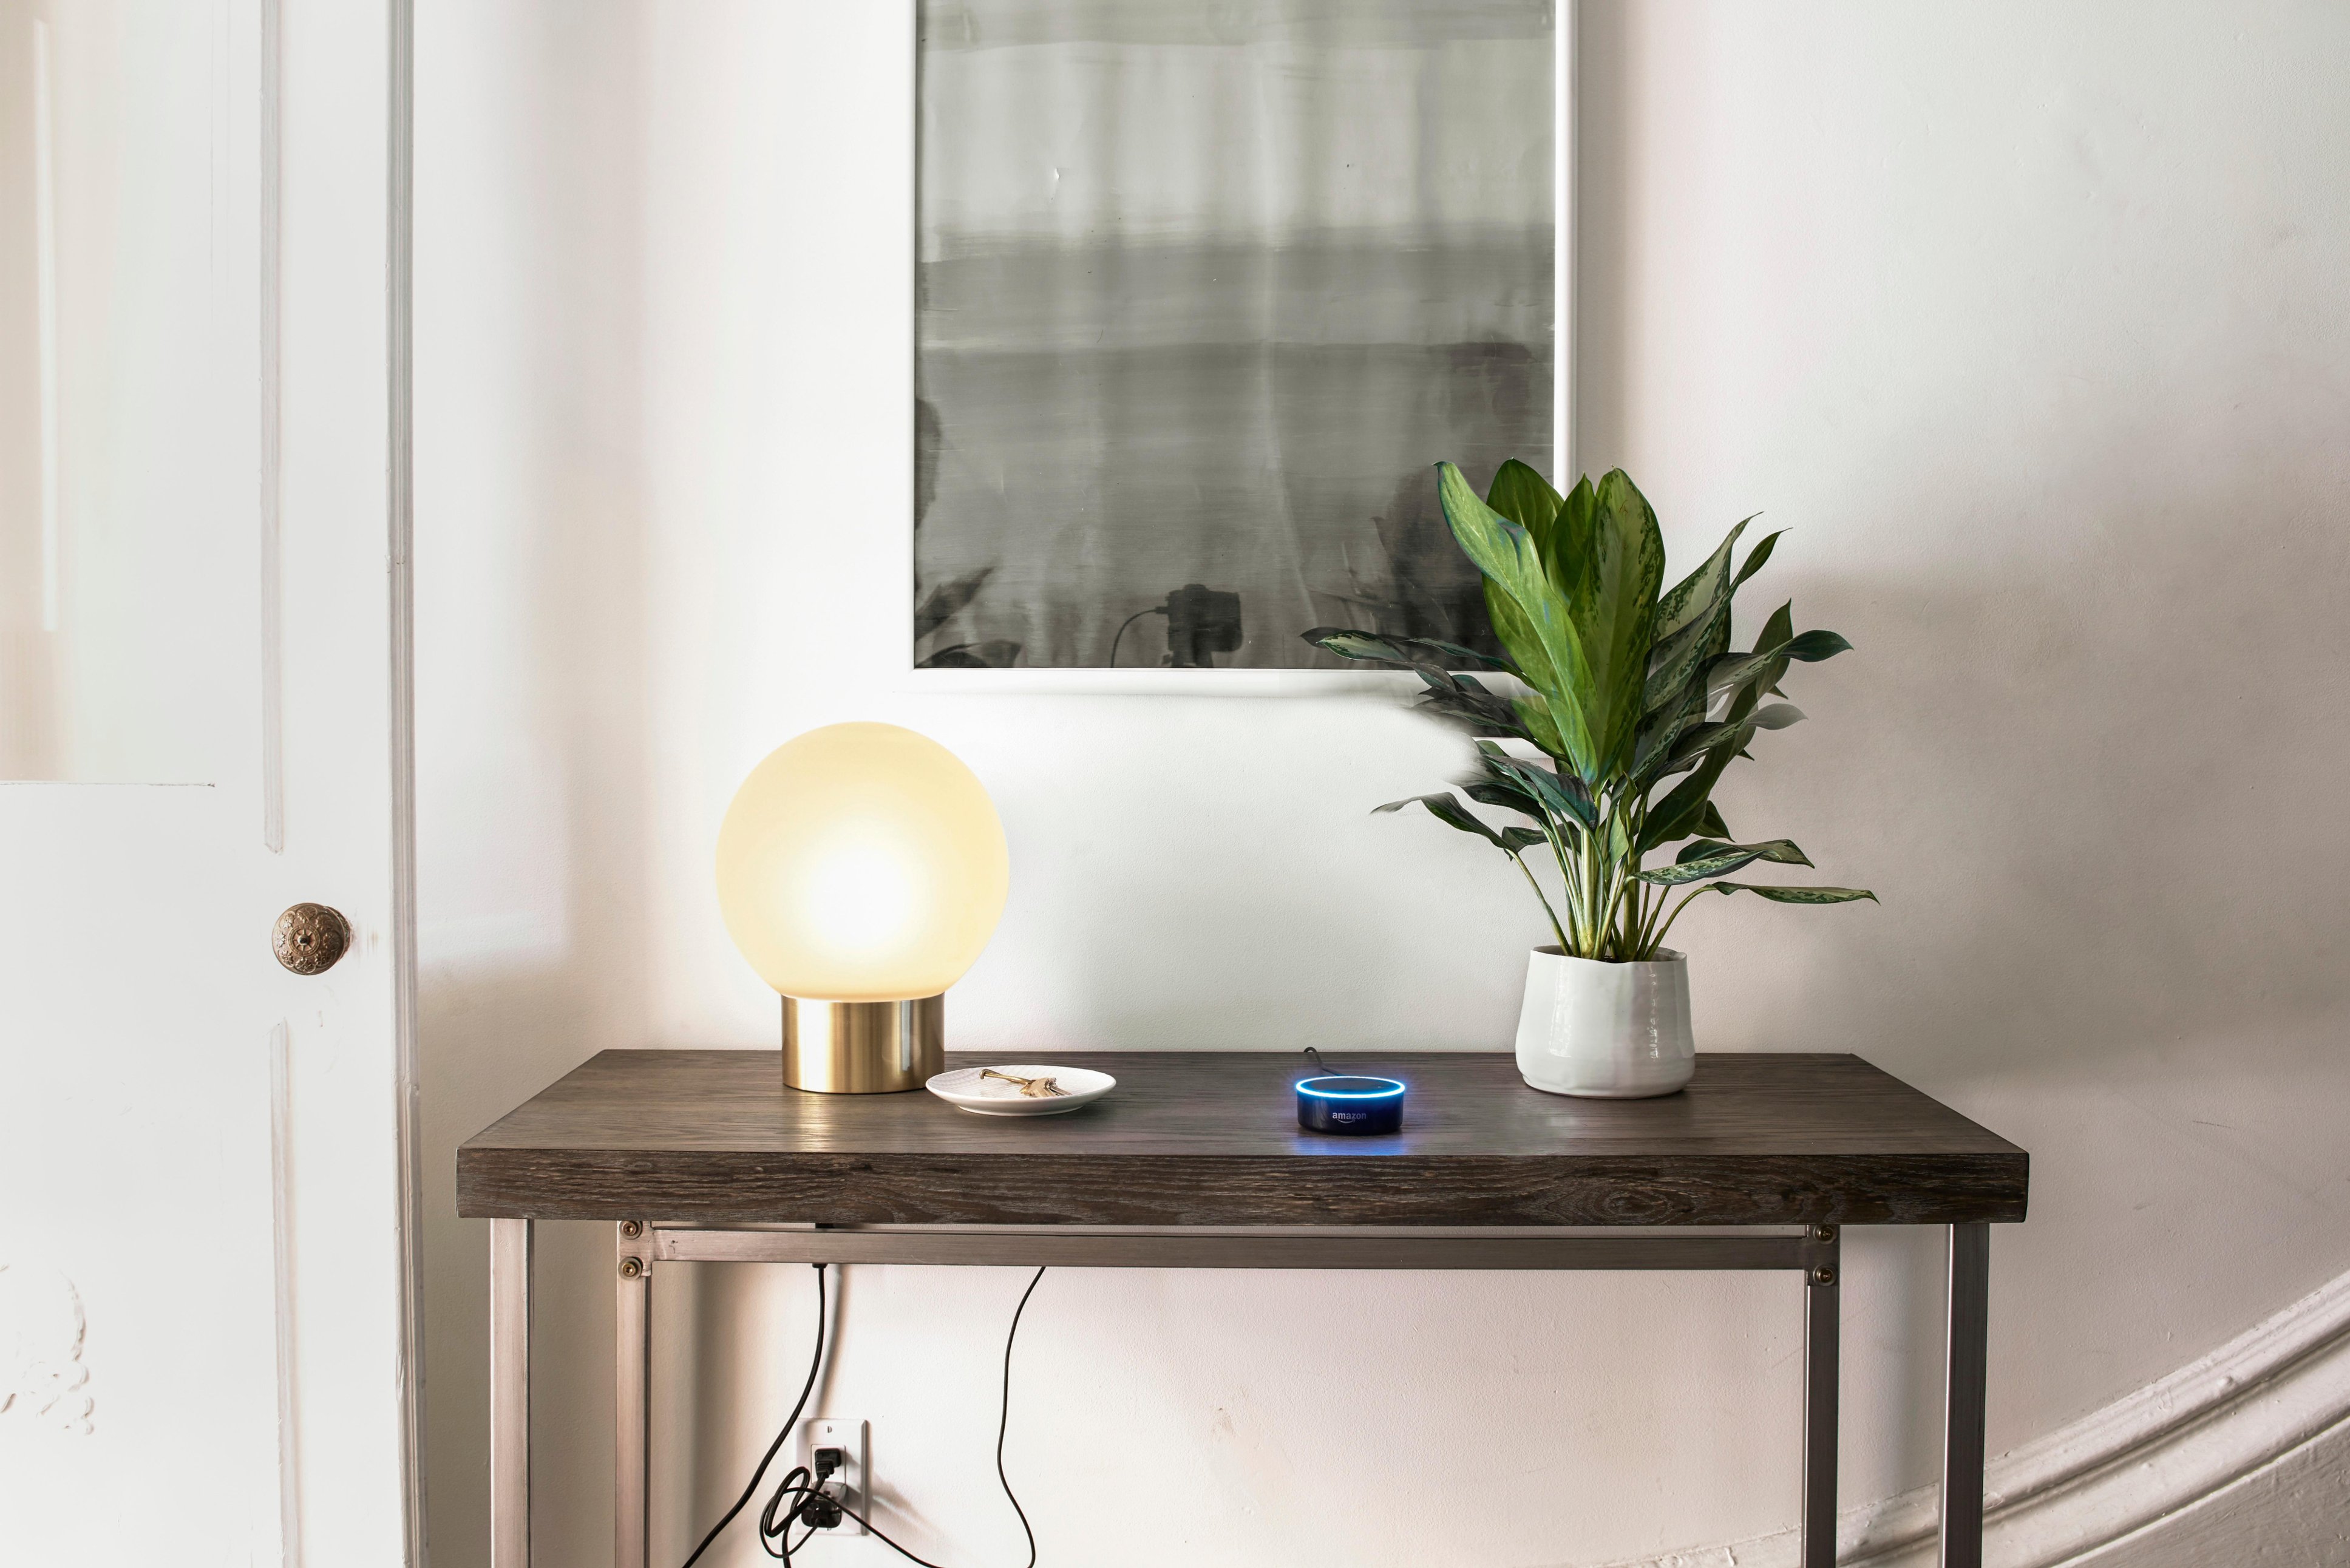 Echo Dot (2nd Generation) - Smart speaker with Alexa - Black